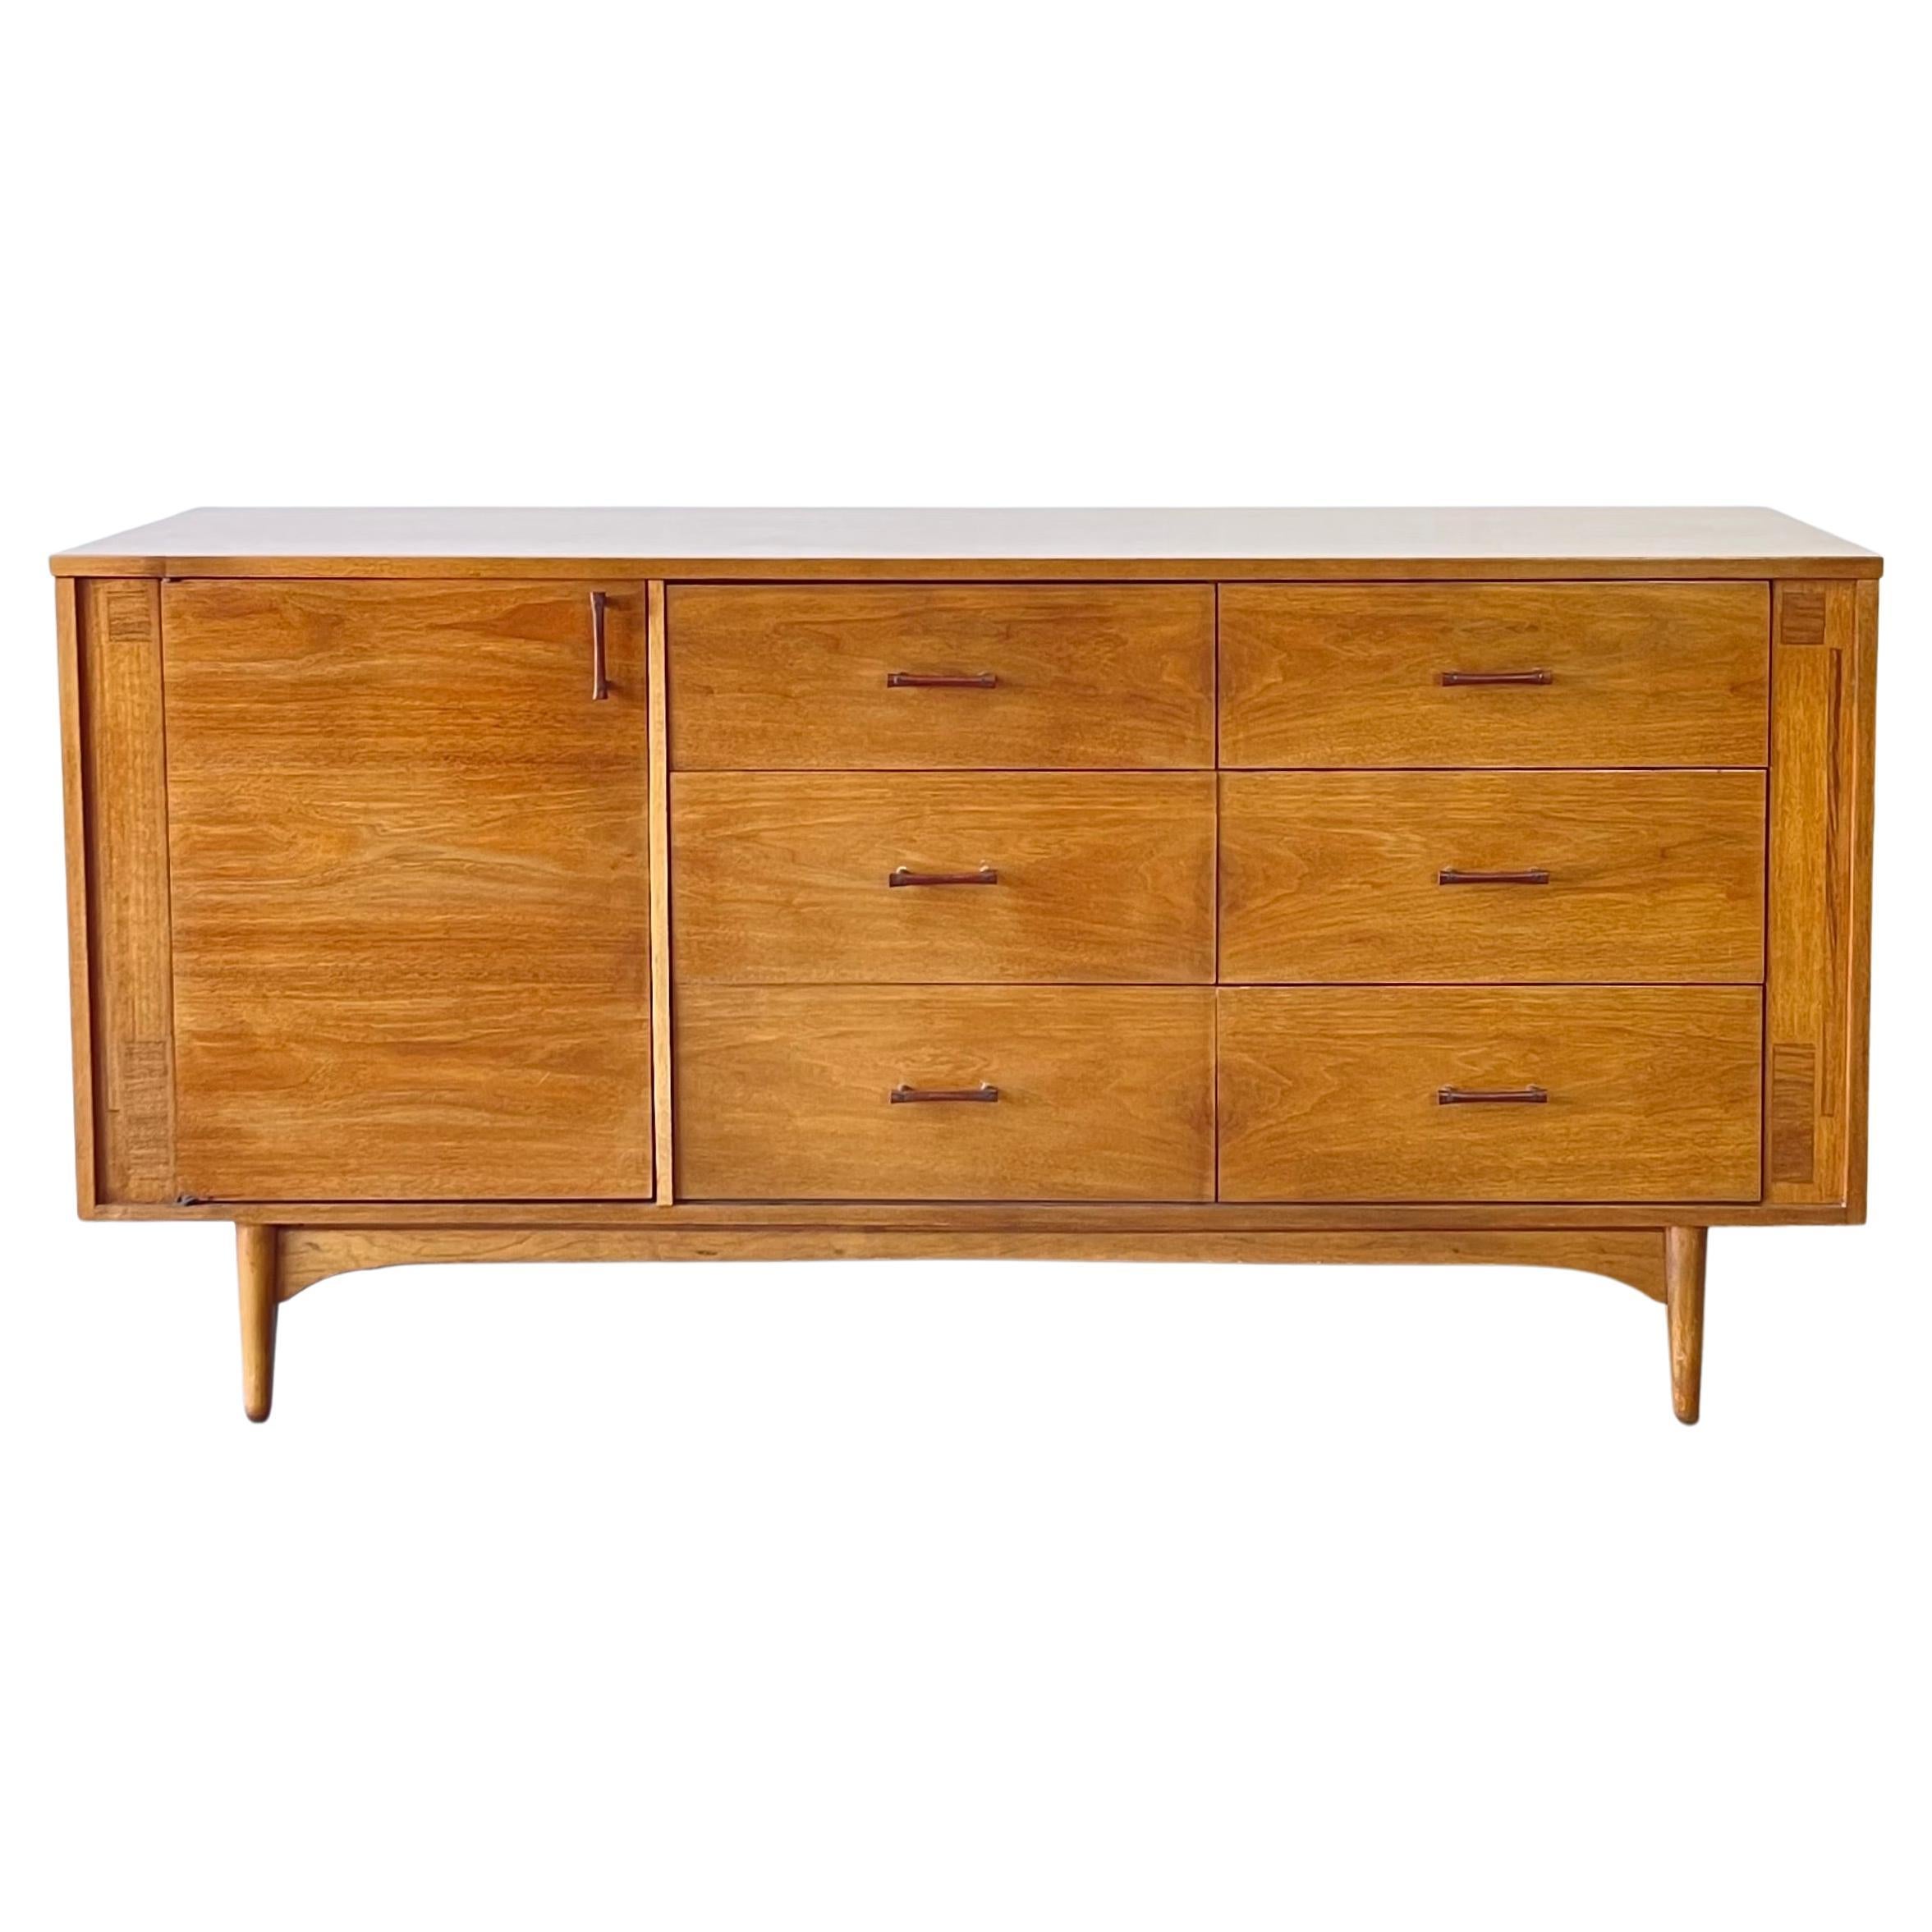 1960s Kroehler Mid-Century Modern Walnut Lowboy Dresser with Rosewood Handles